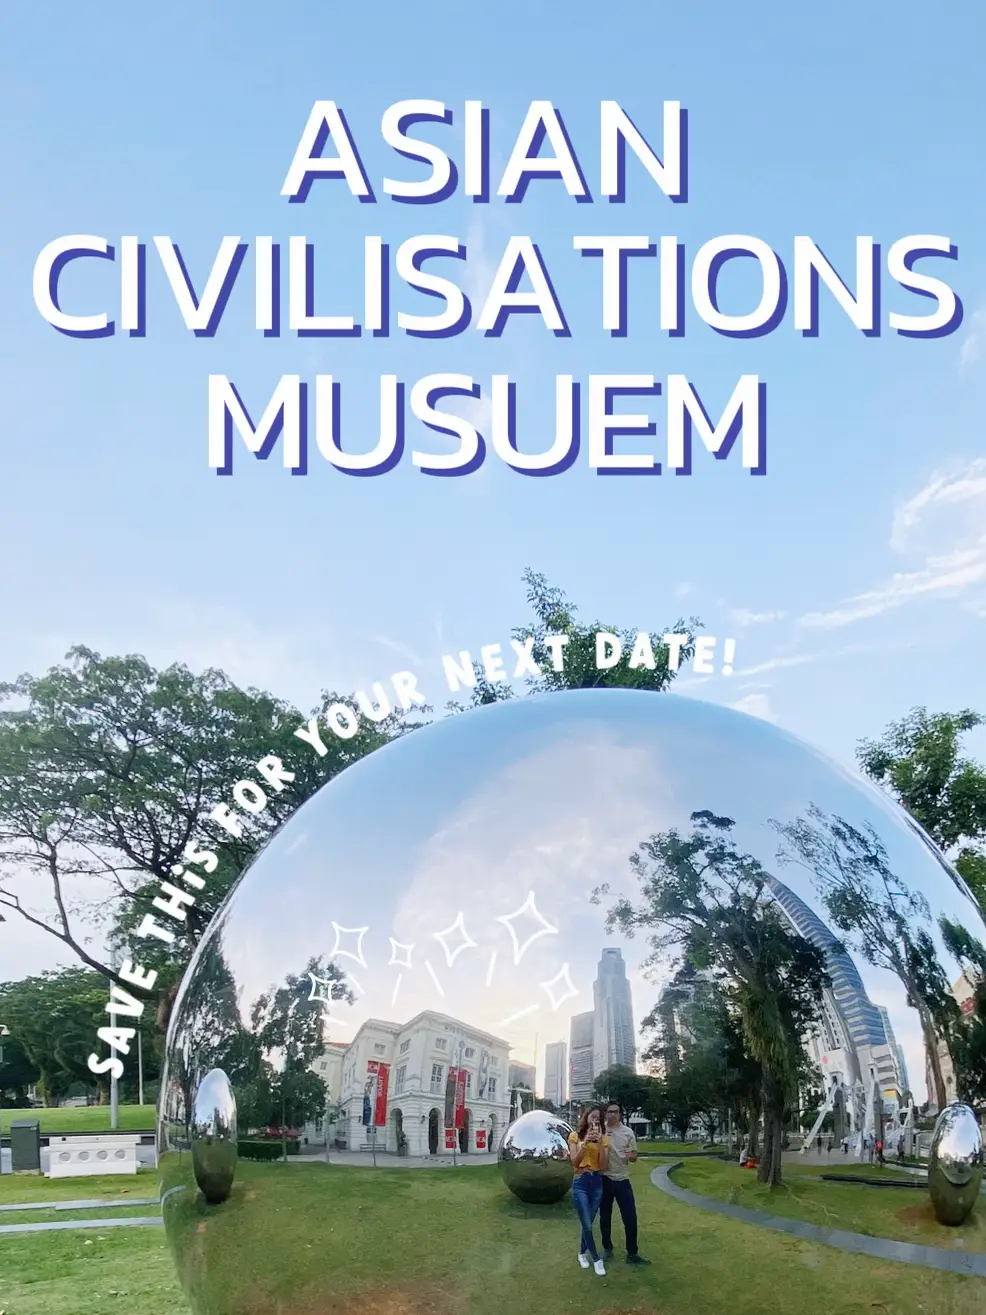 FREE museum visit - Your next date idea! ✨'s images